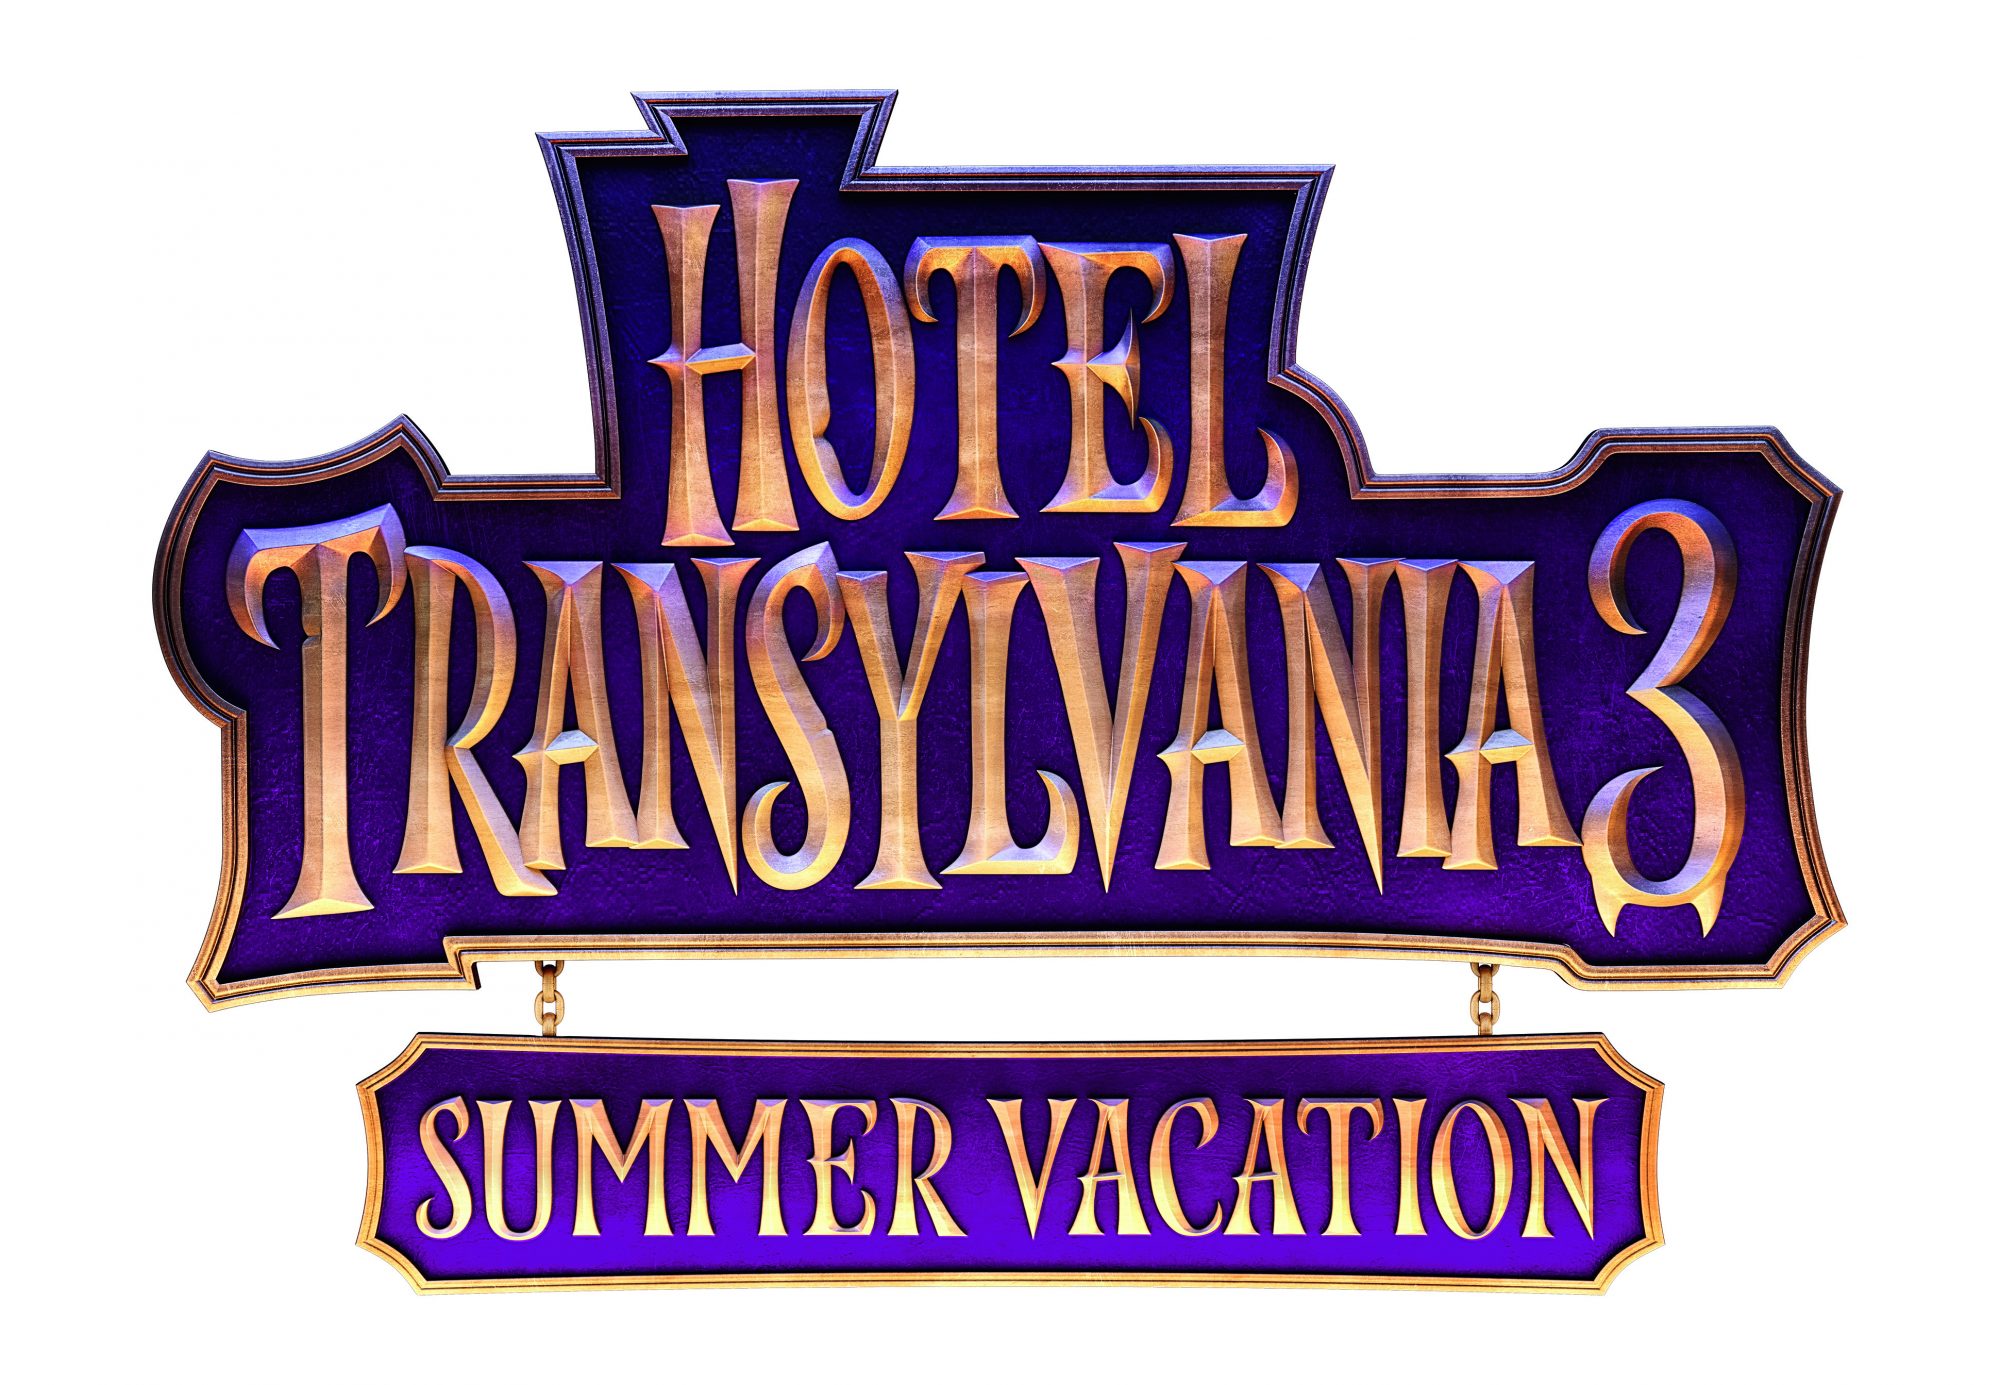 Hotel Transylvania 3 Logo